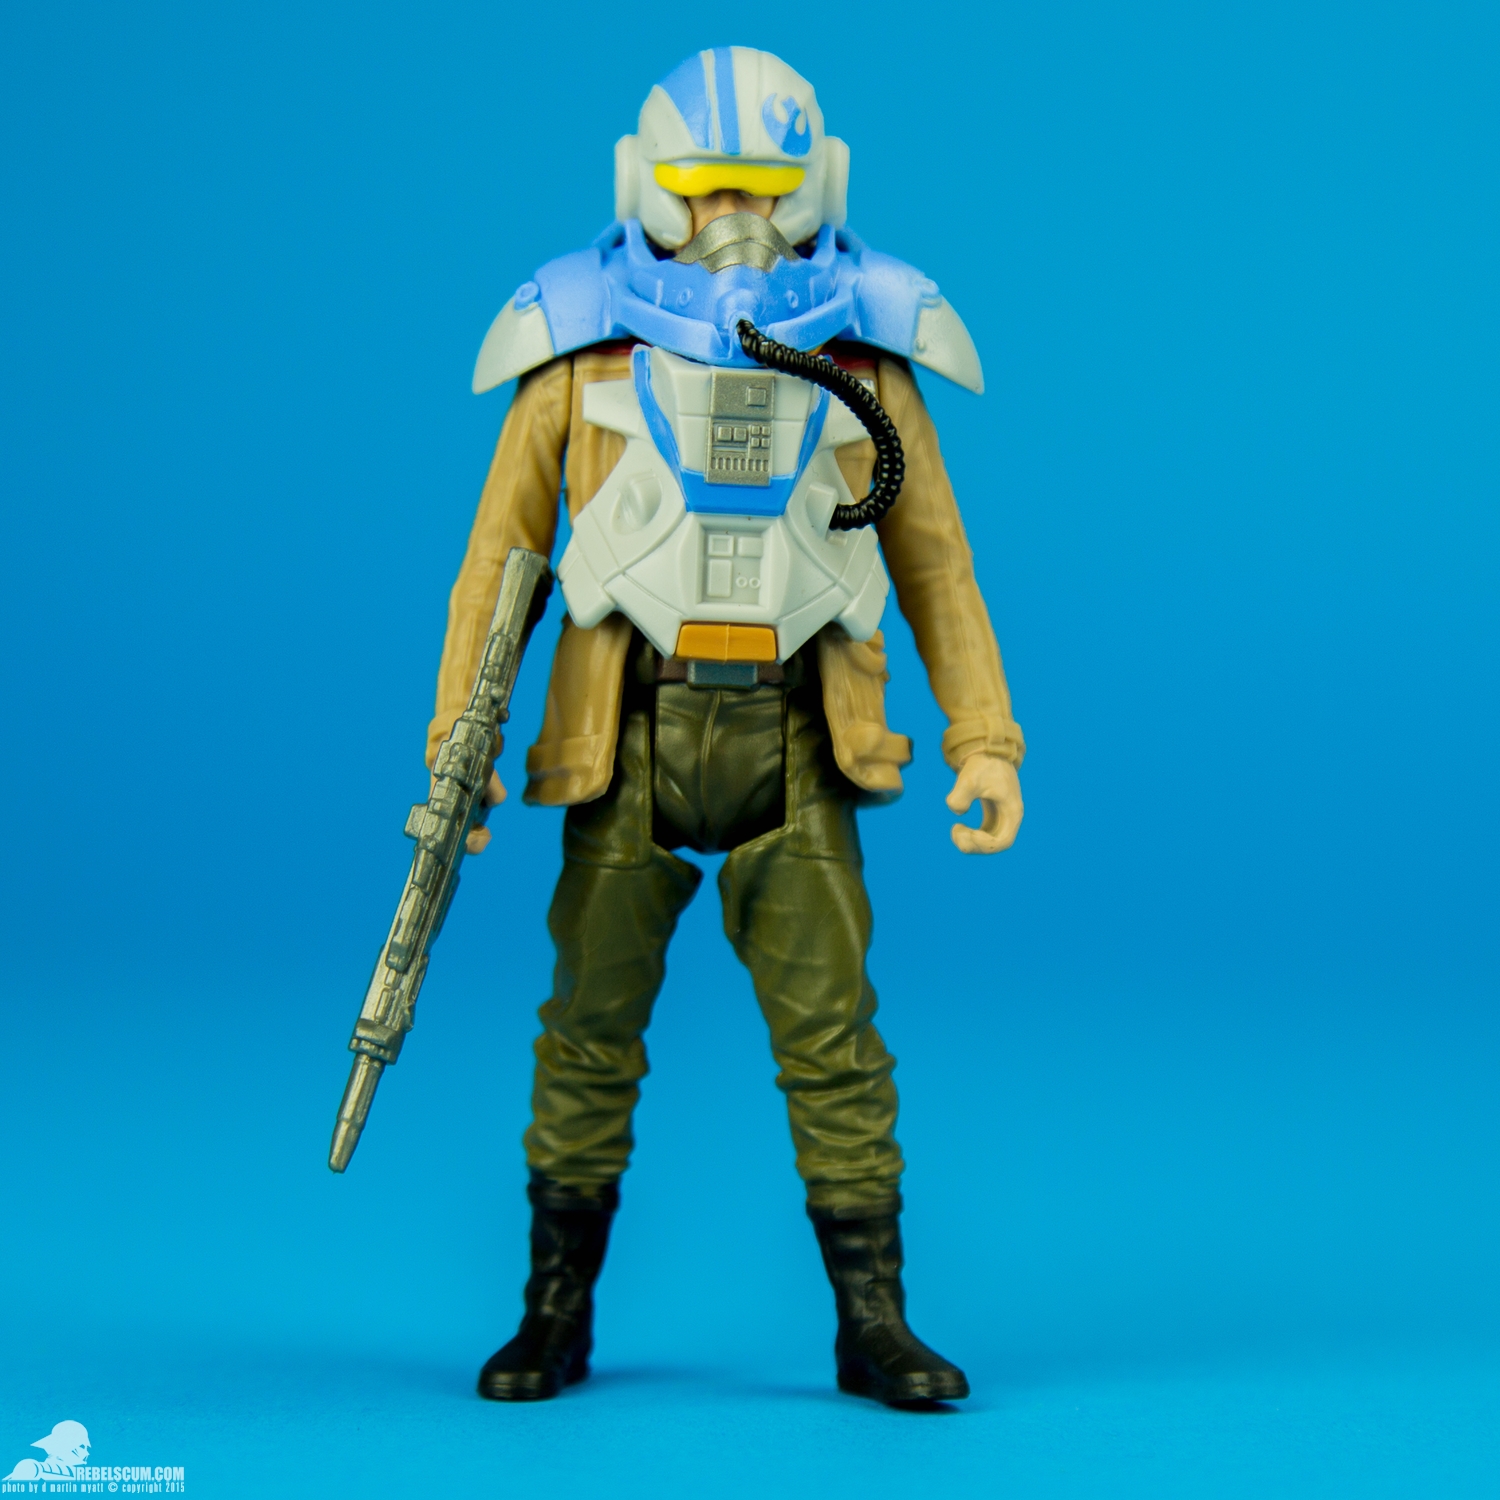 Armor-Up-Poe-Dameron-The-Force-Awakens-Hasbro-005.jpg